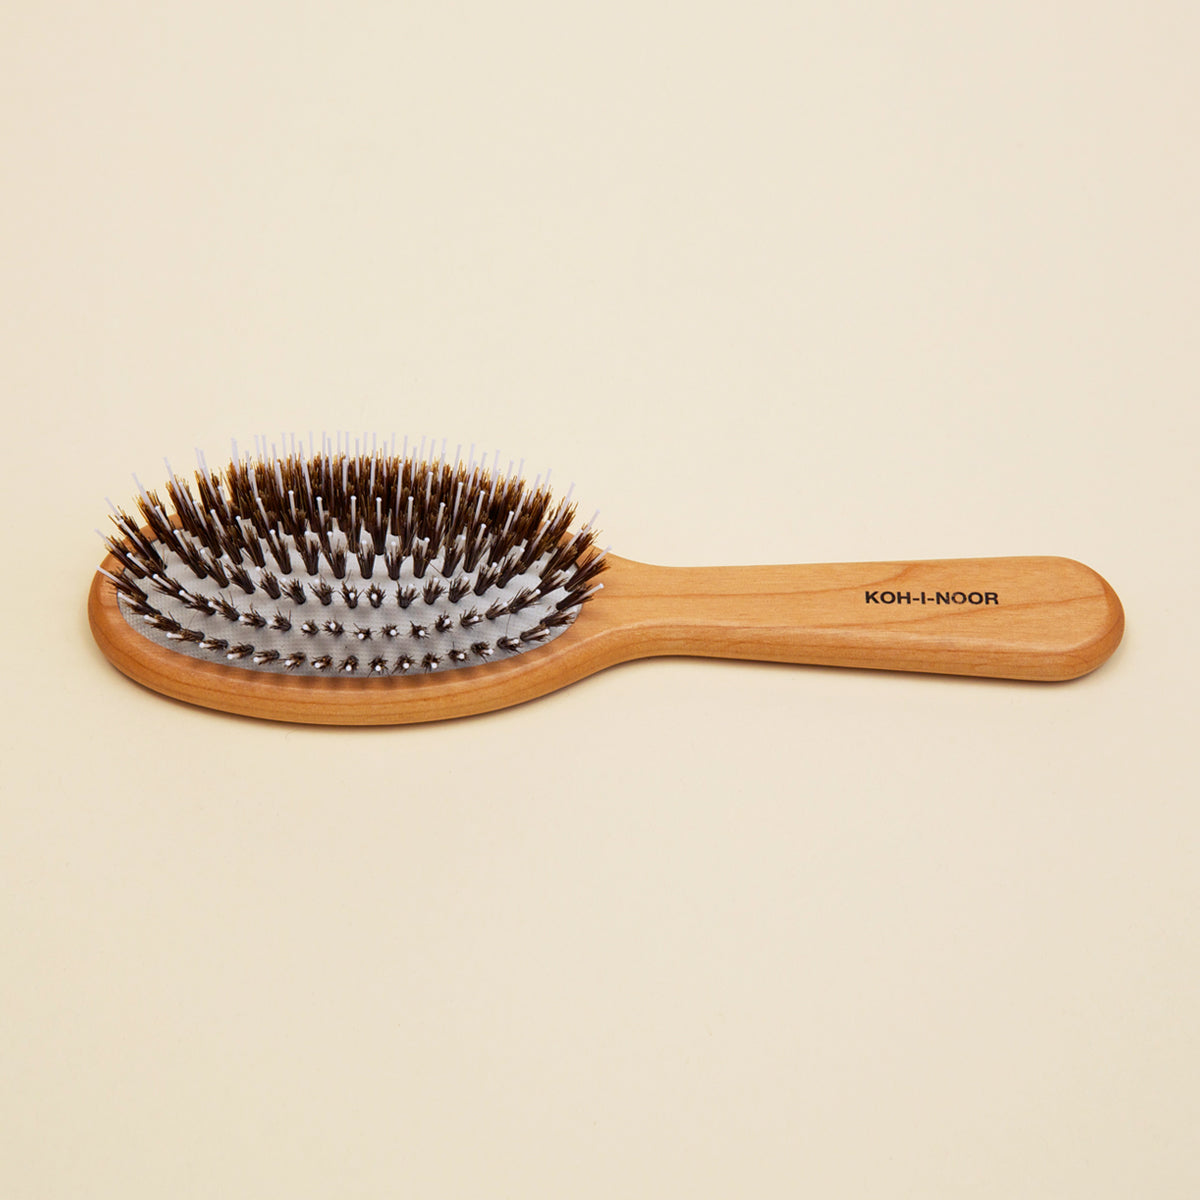 Alder Wood Hair brush